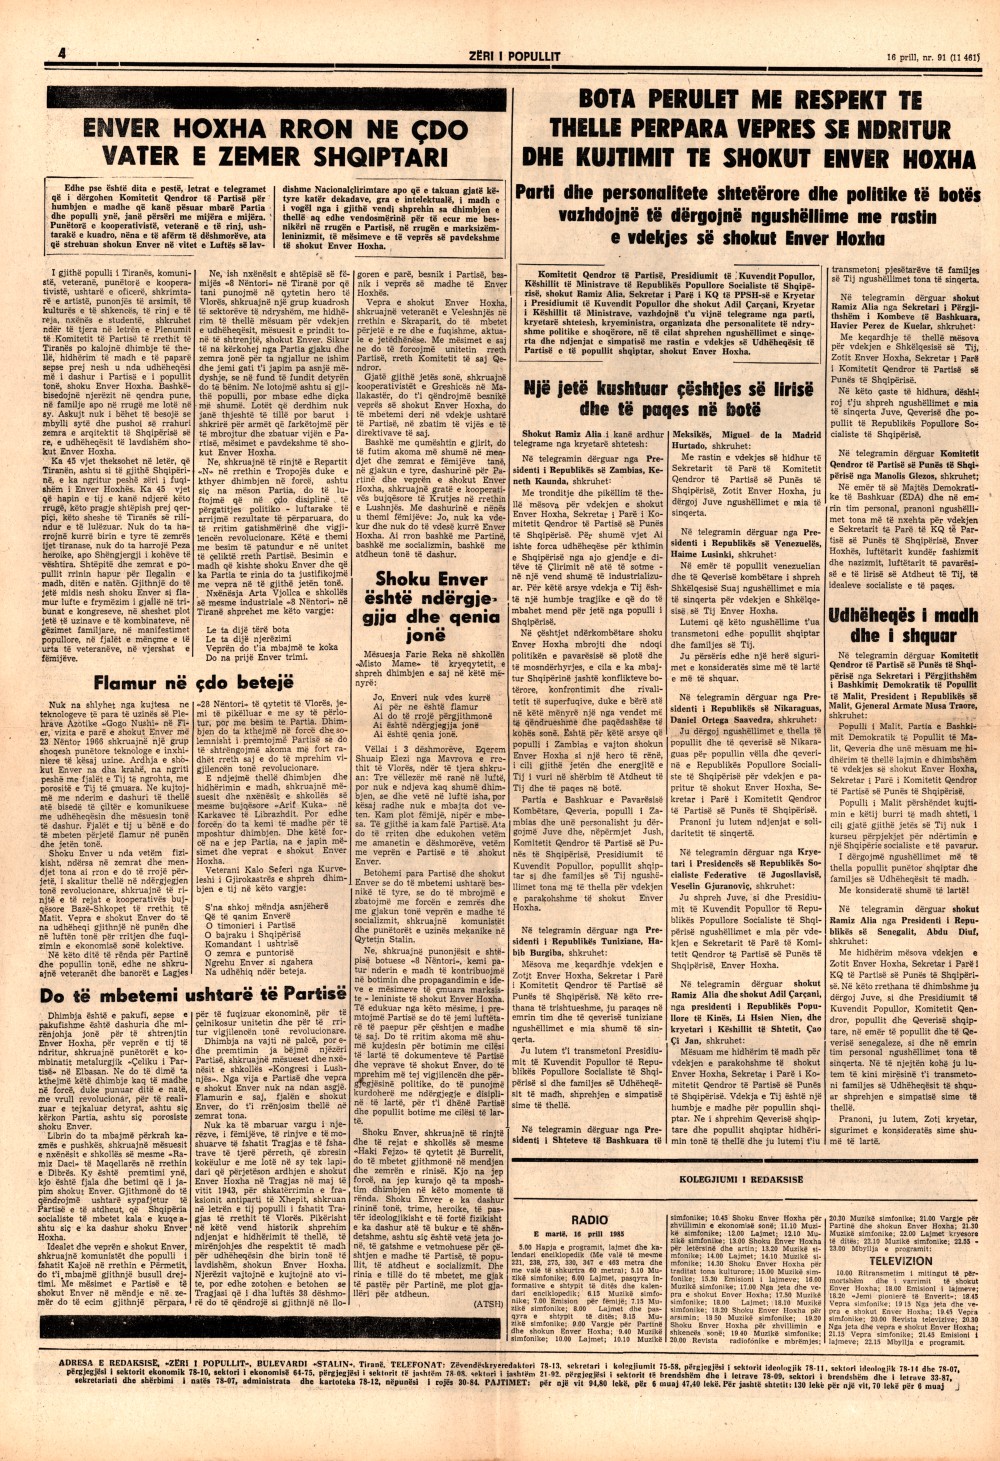 Газета "Зери и популлит" от 16 апреля 1985 года (четвертая полоса)